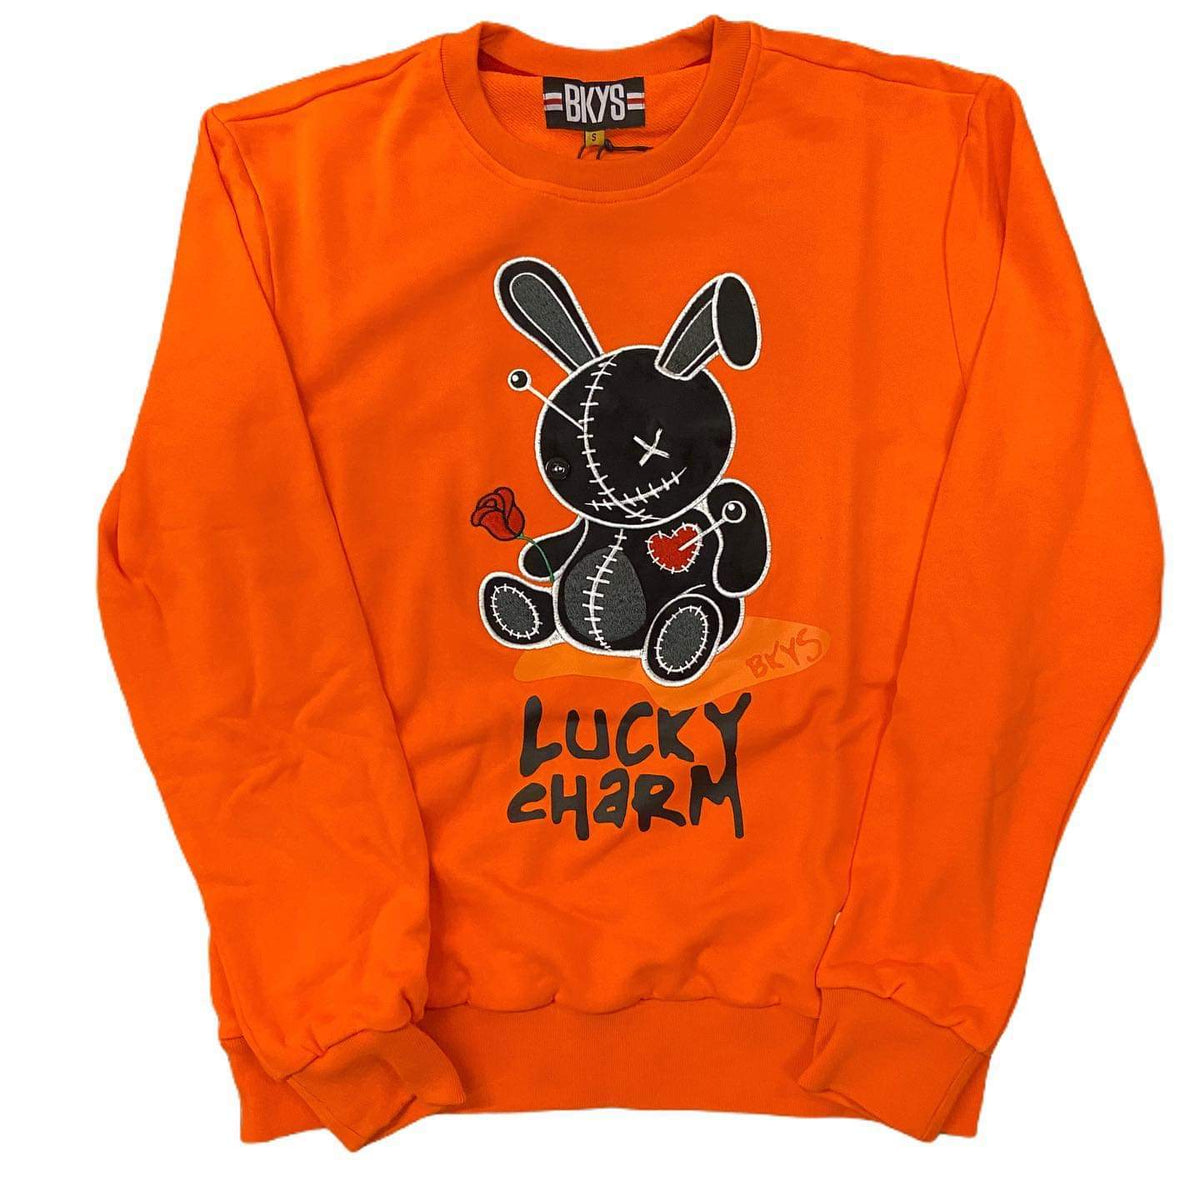 Lucky charm sweater – FINE FRATELLI mens wear